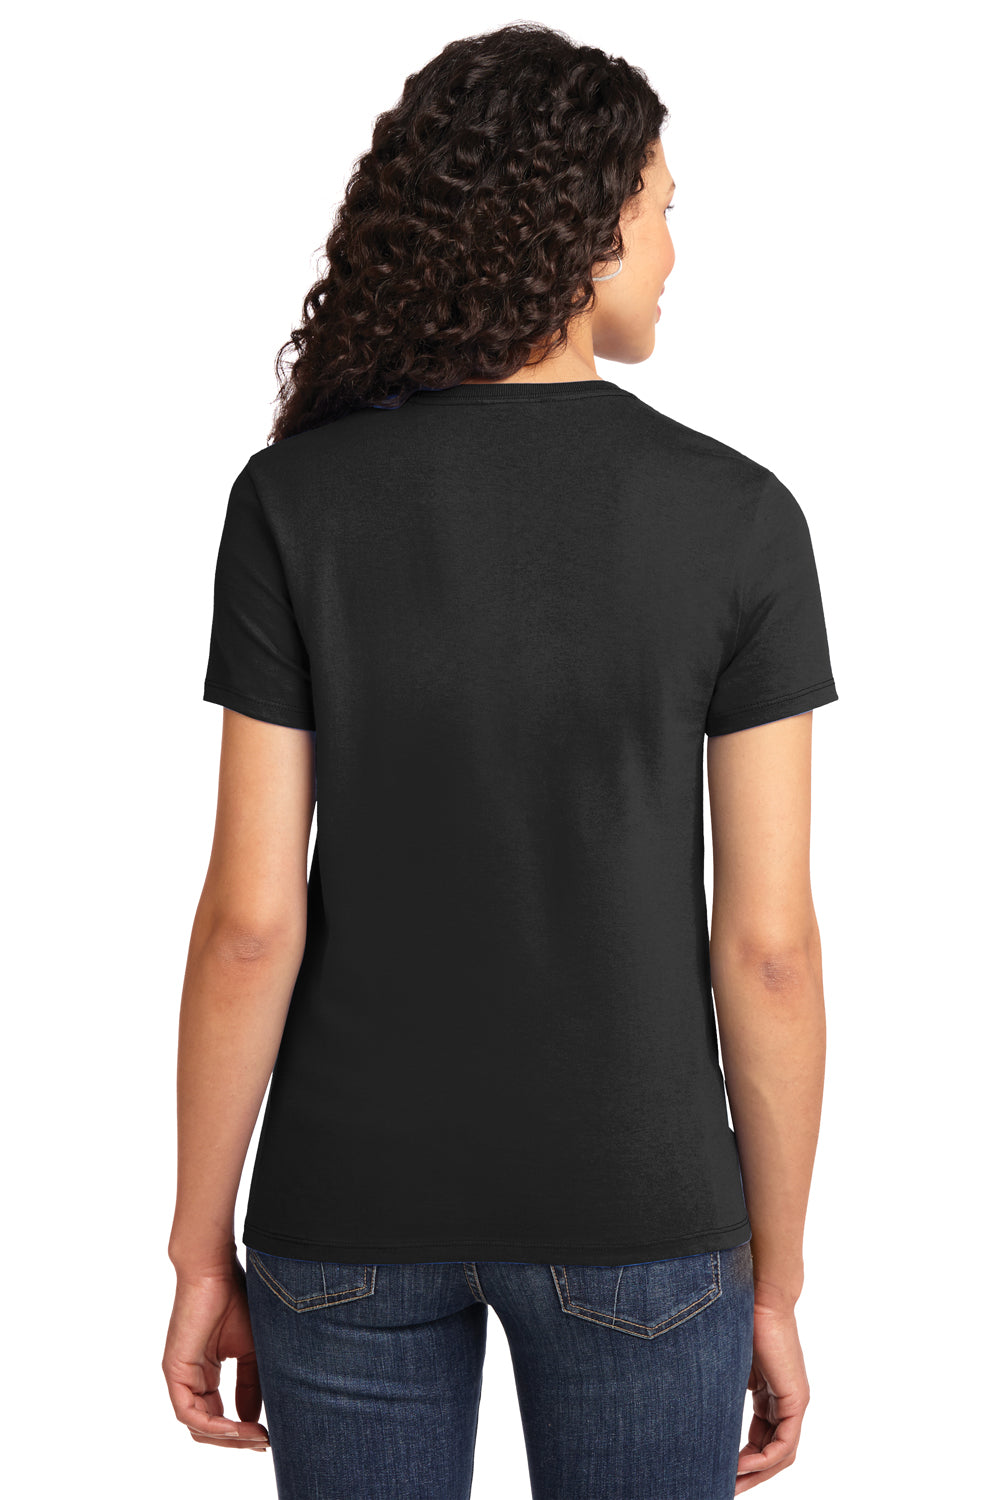 Port & Company LPC61 Womens Essential Short Sleeve Crewneck T-Shirt Black Back